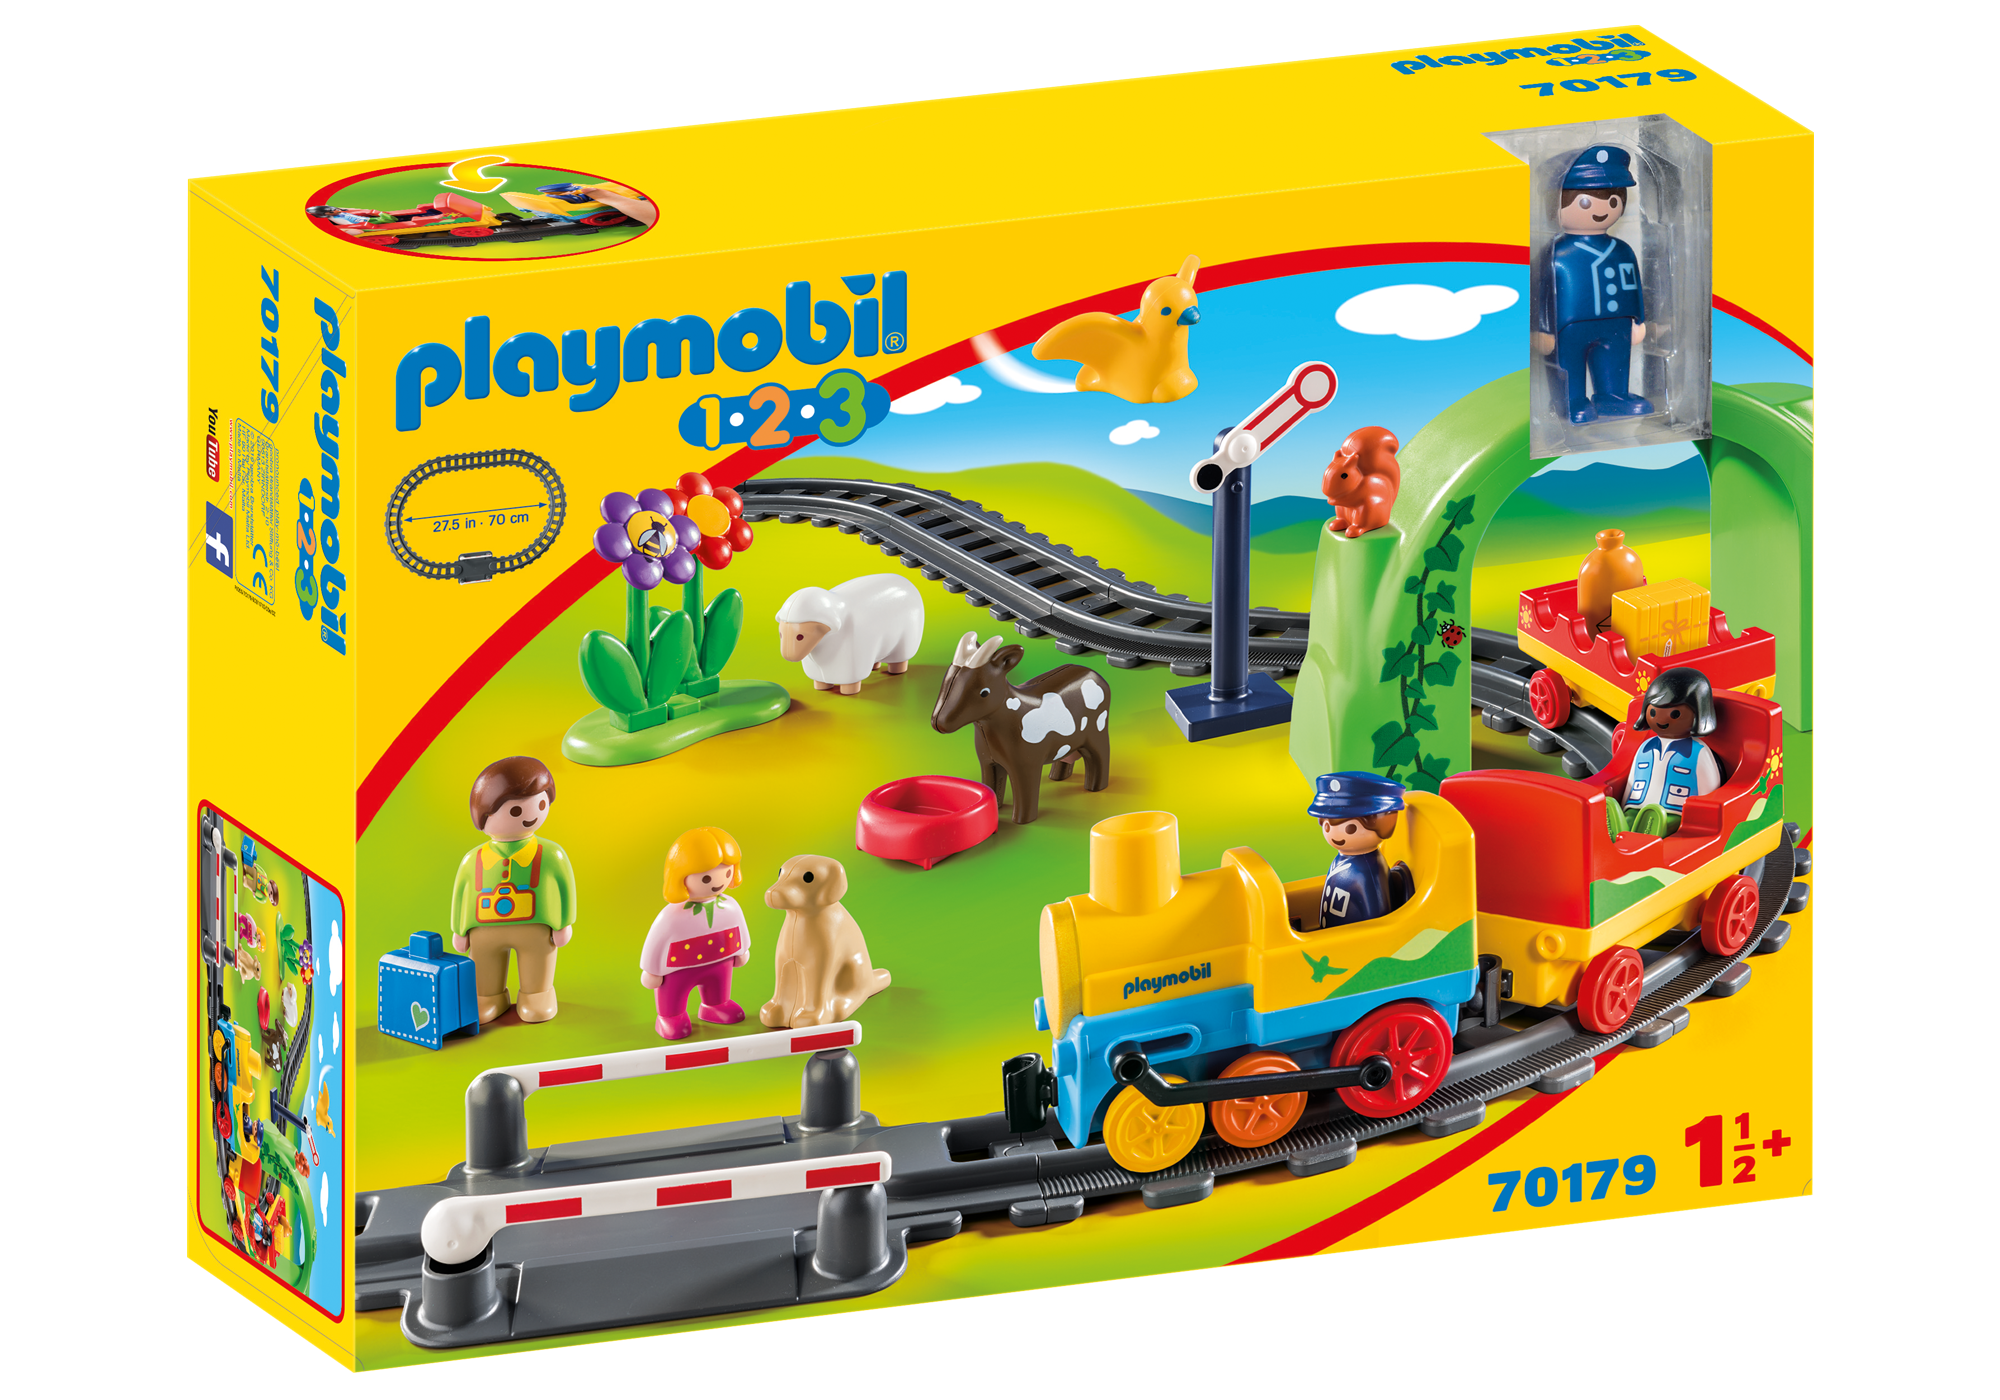 playmobile train